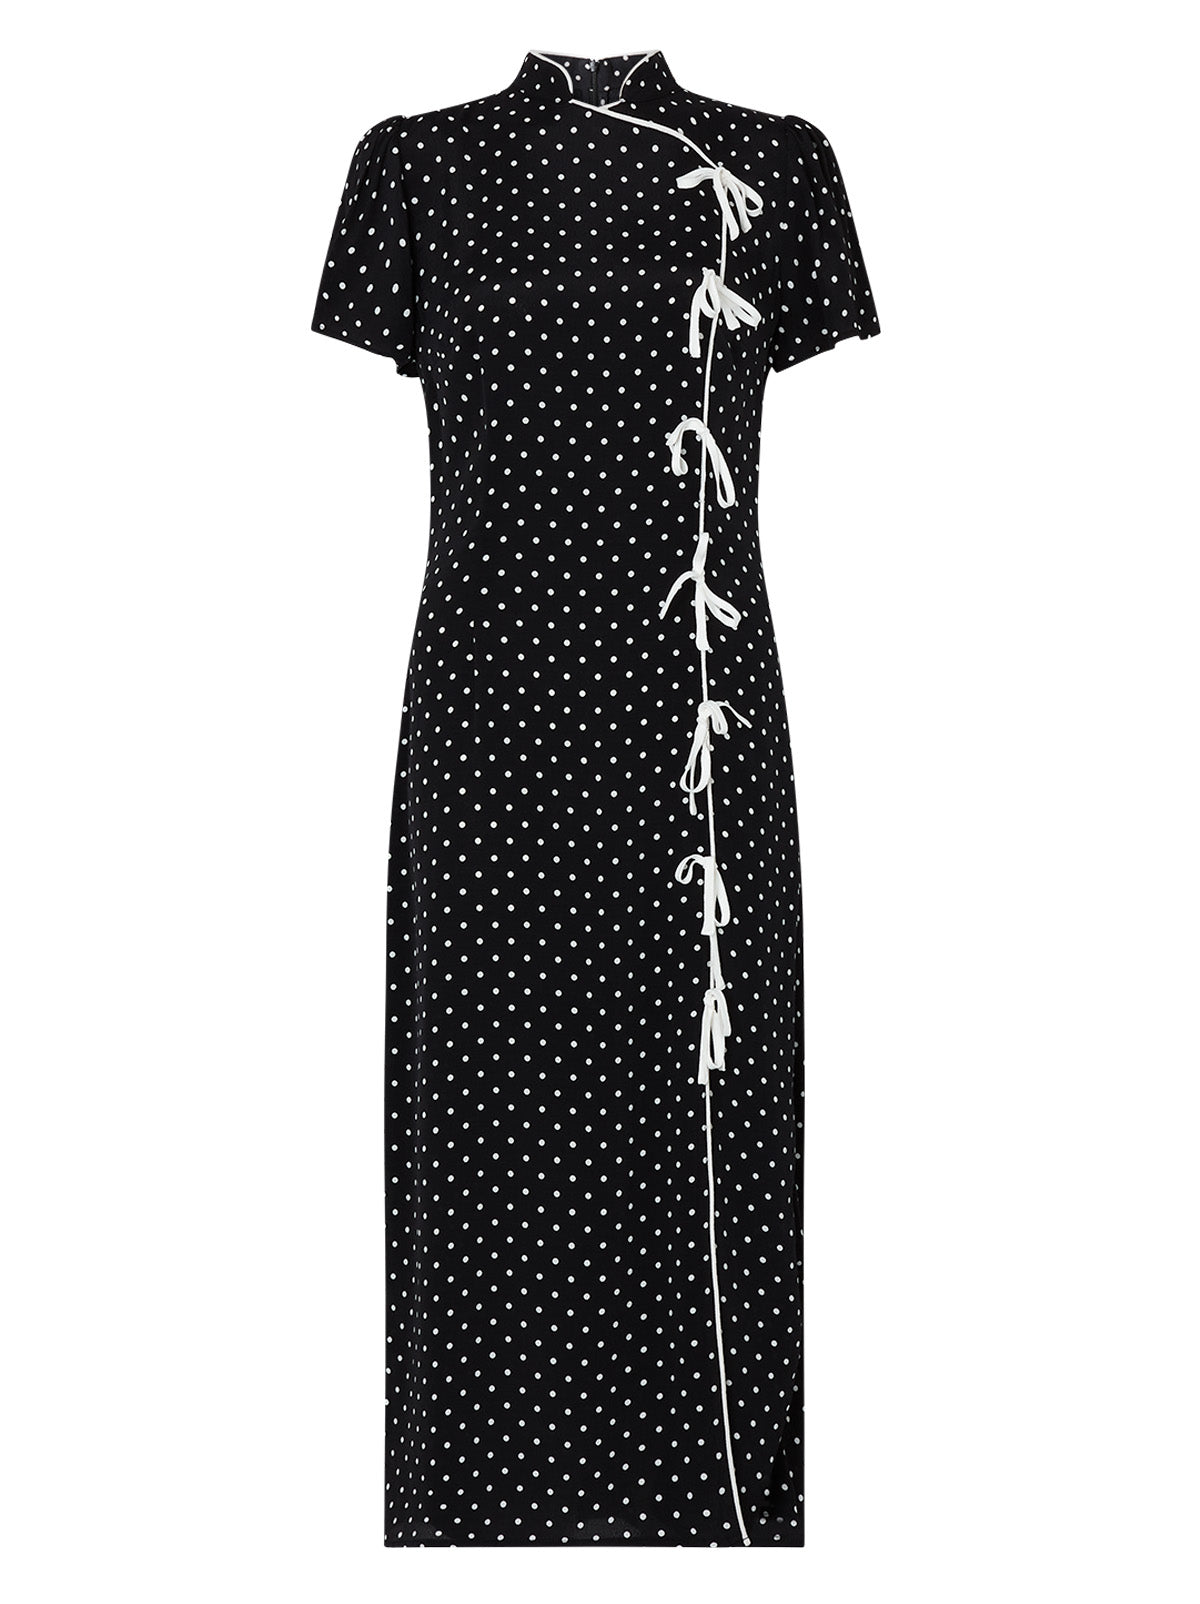 Leia Black Polka Dot Midi Dress by KITRI Studio